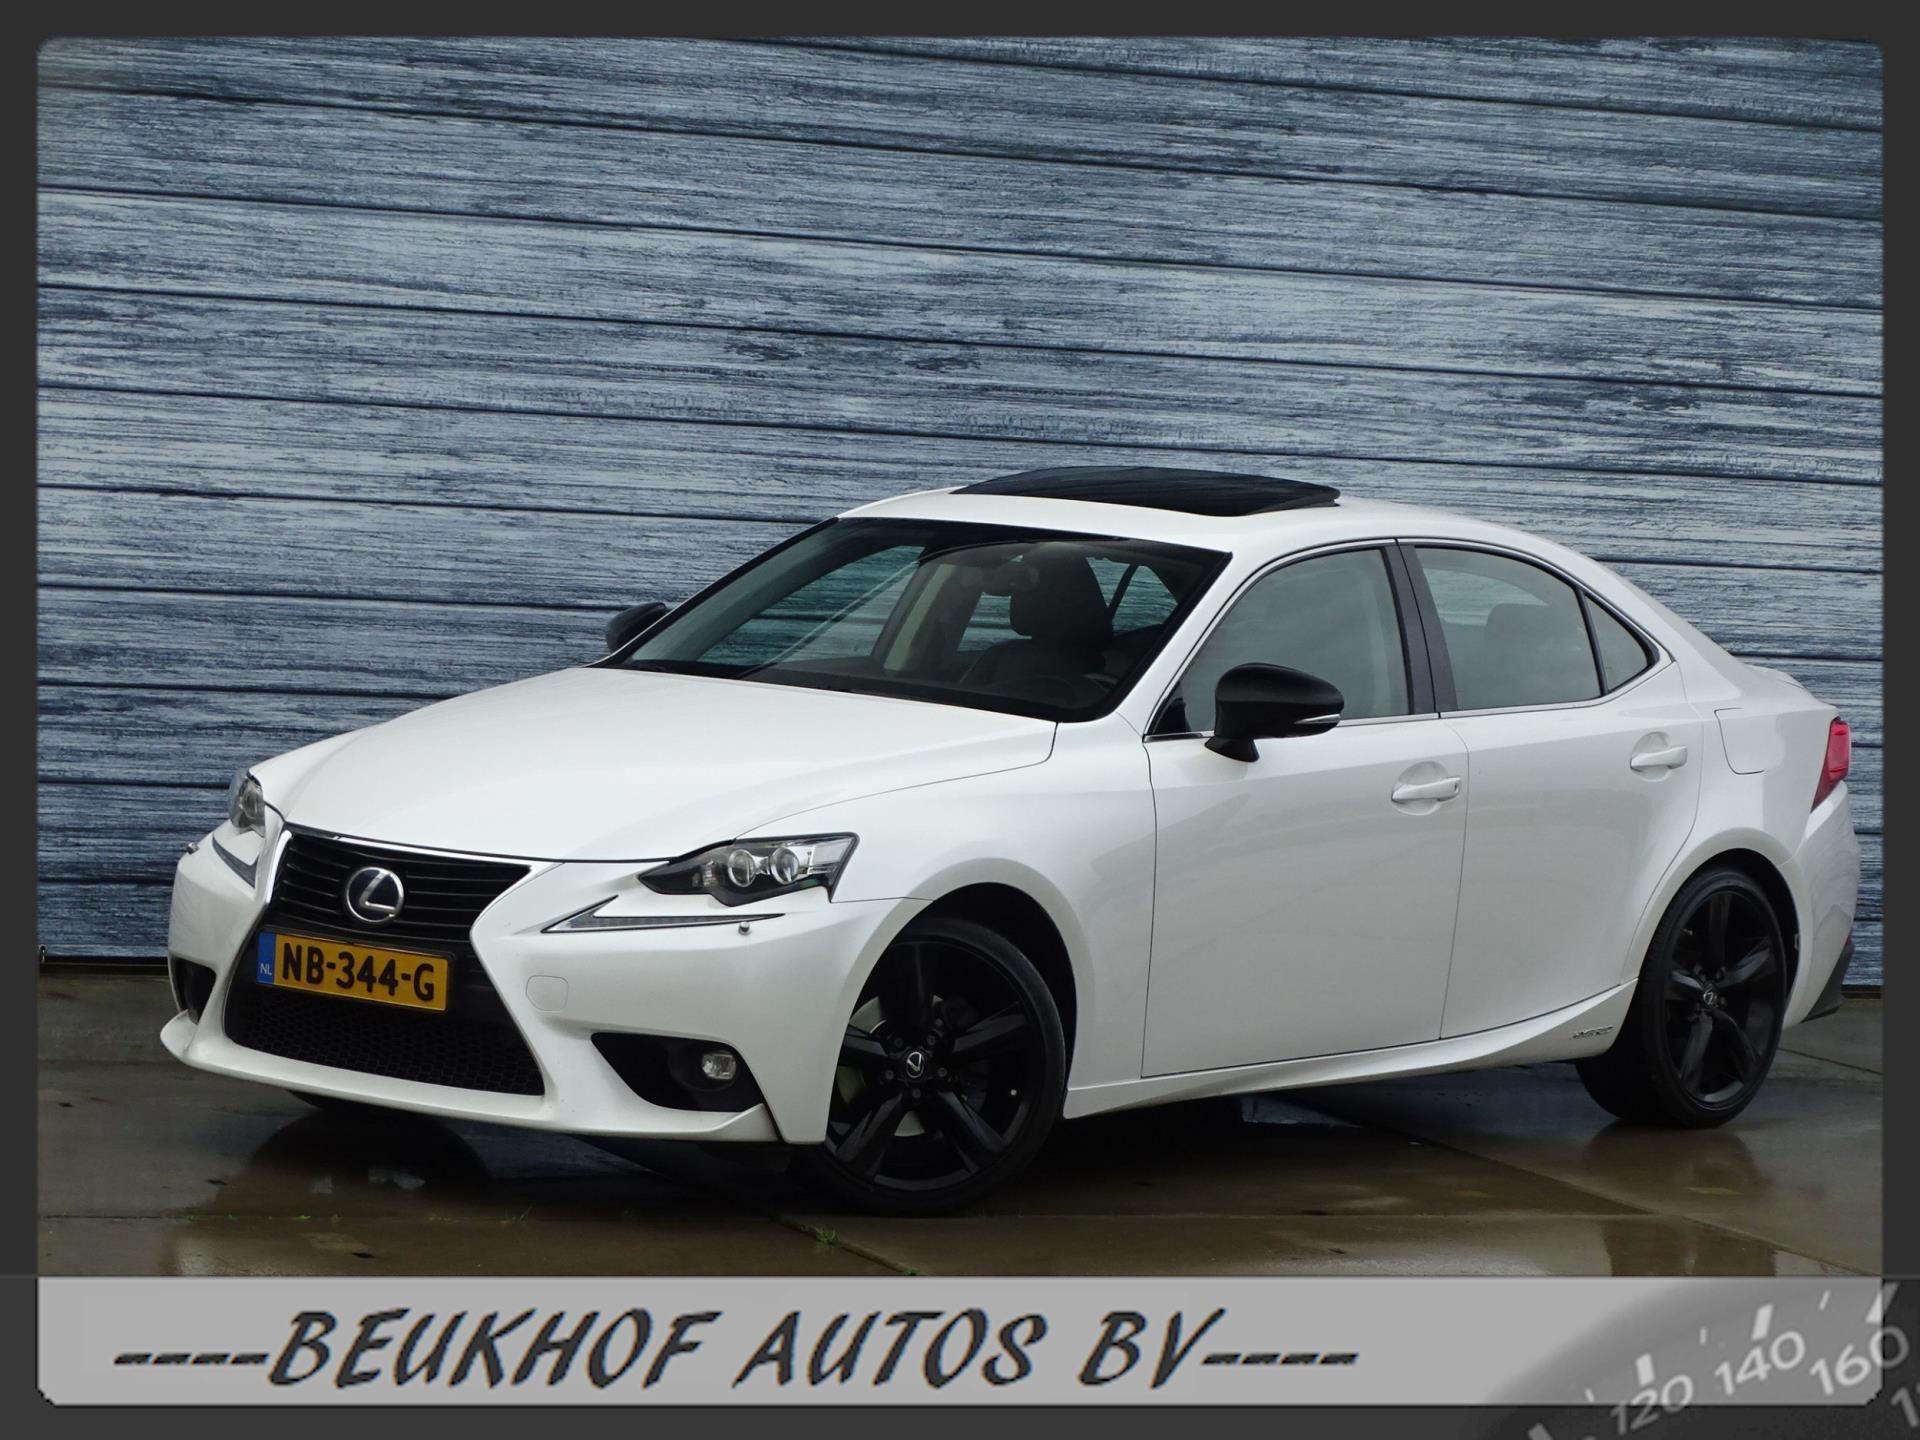 Lexus IS occasion - Beukhof Auto's B.V.